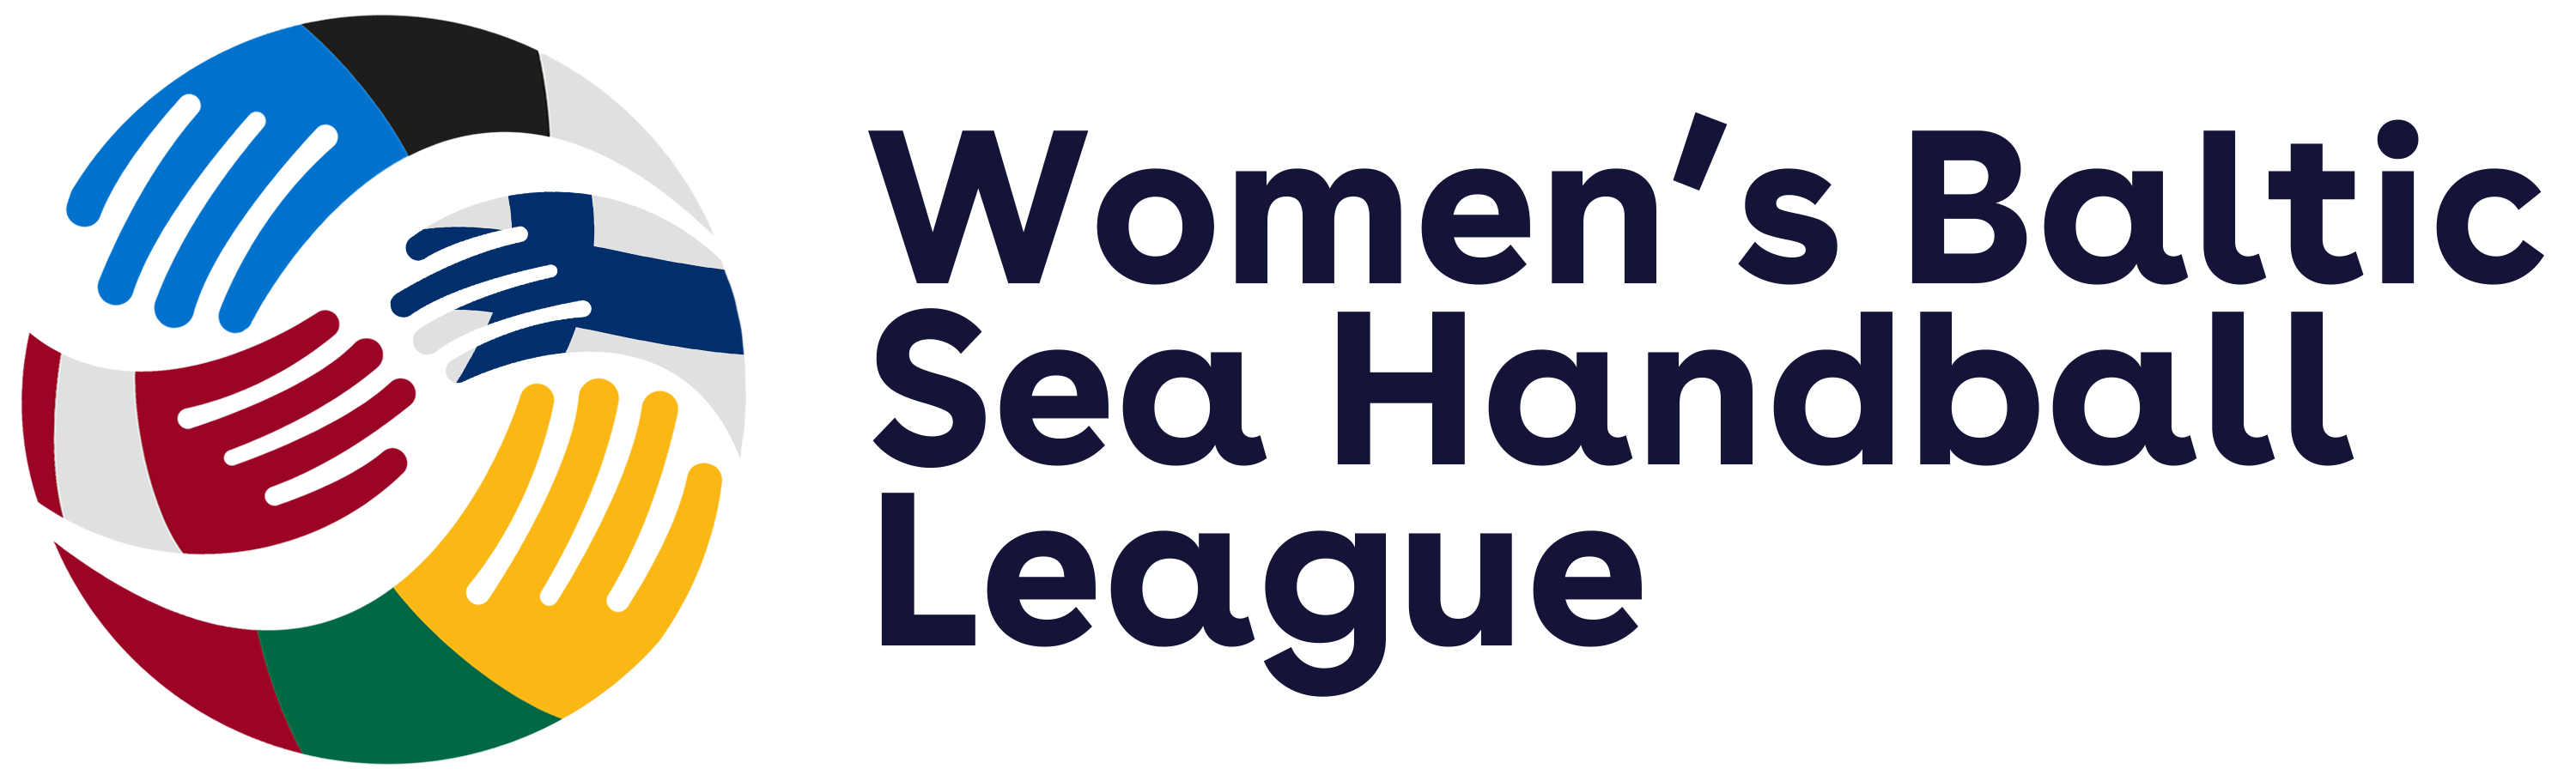 Women's Baltic Sea Handball League